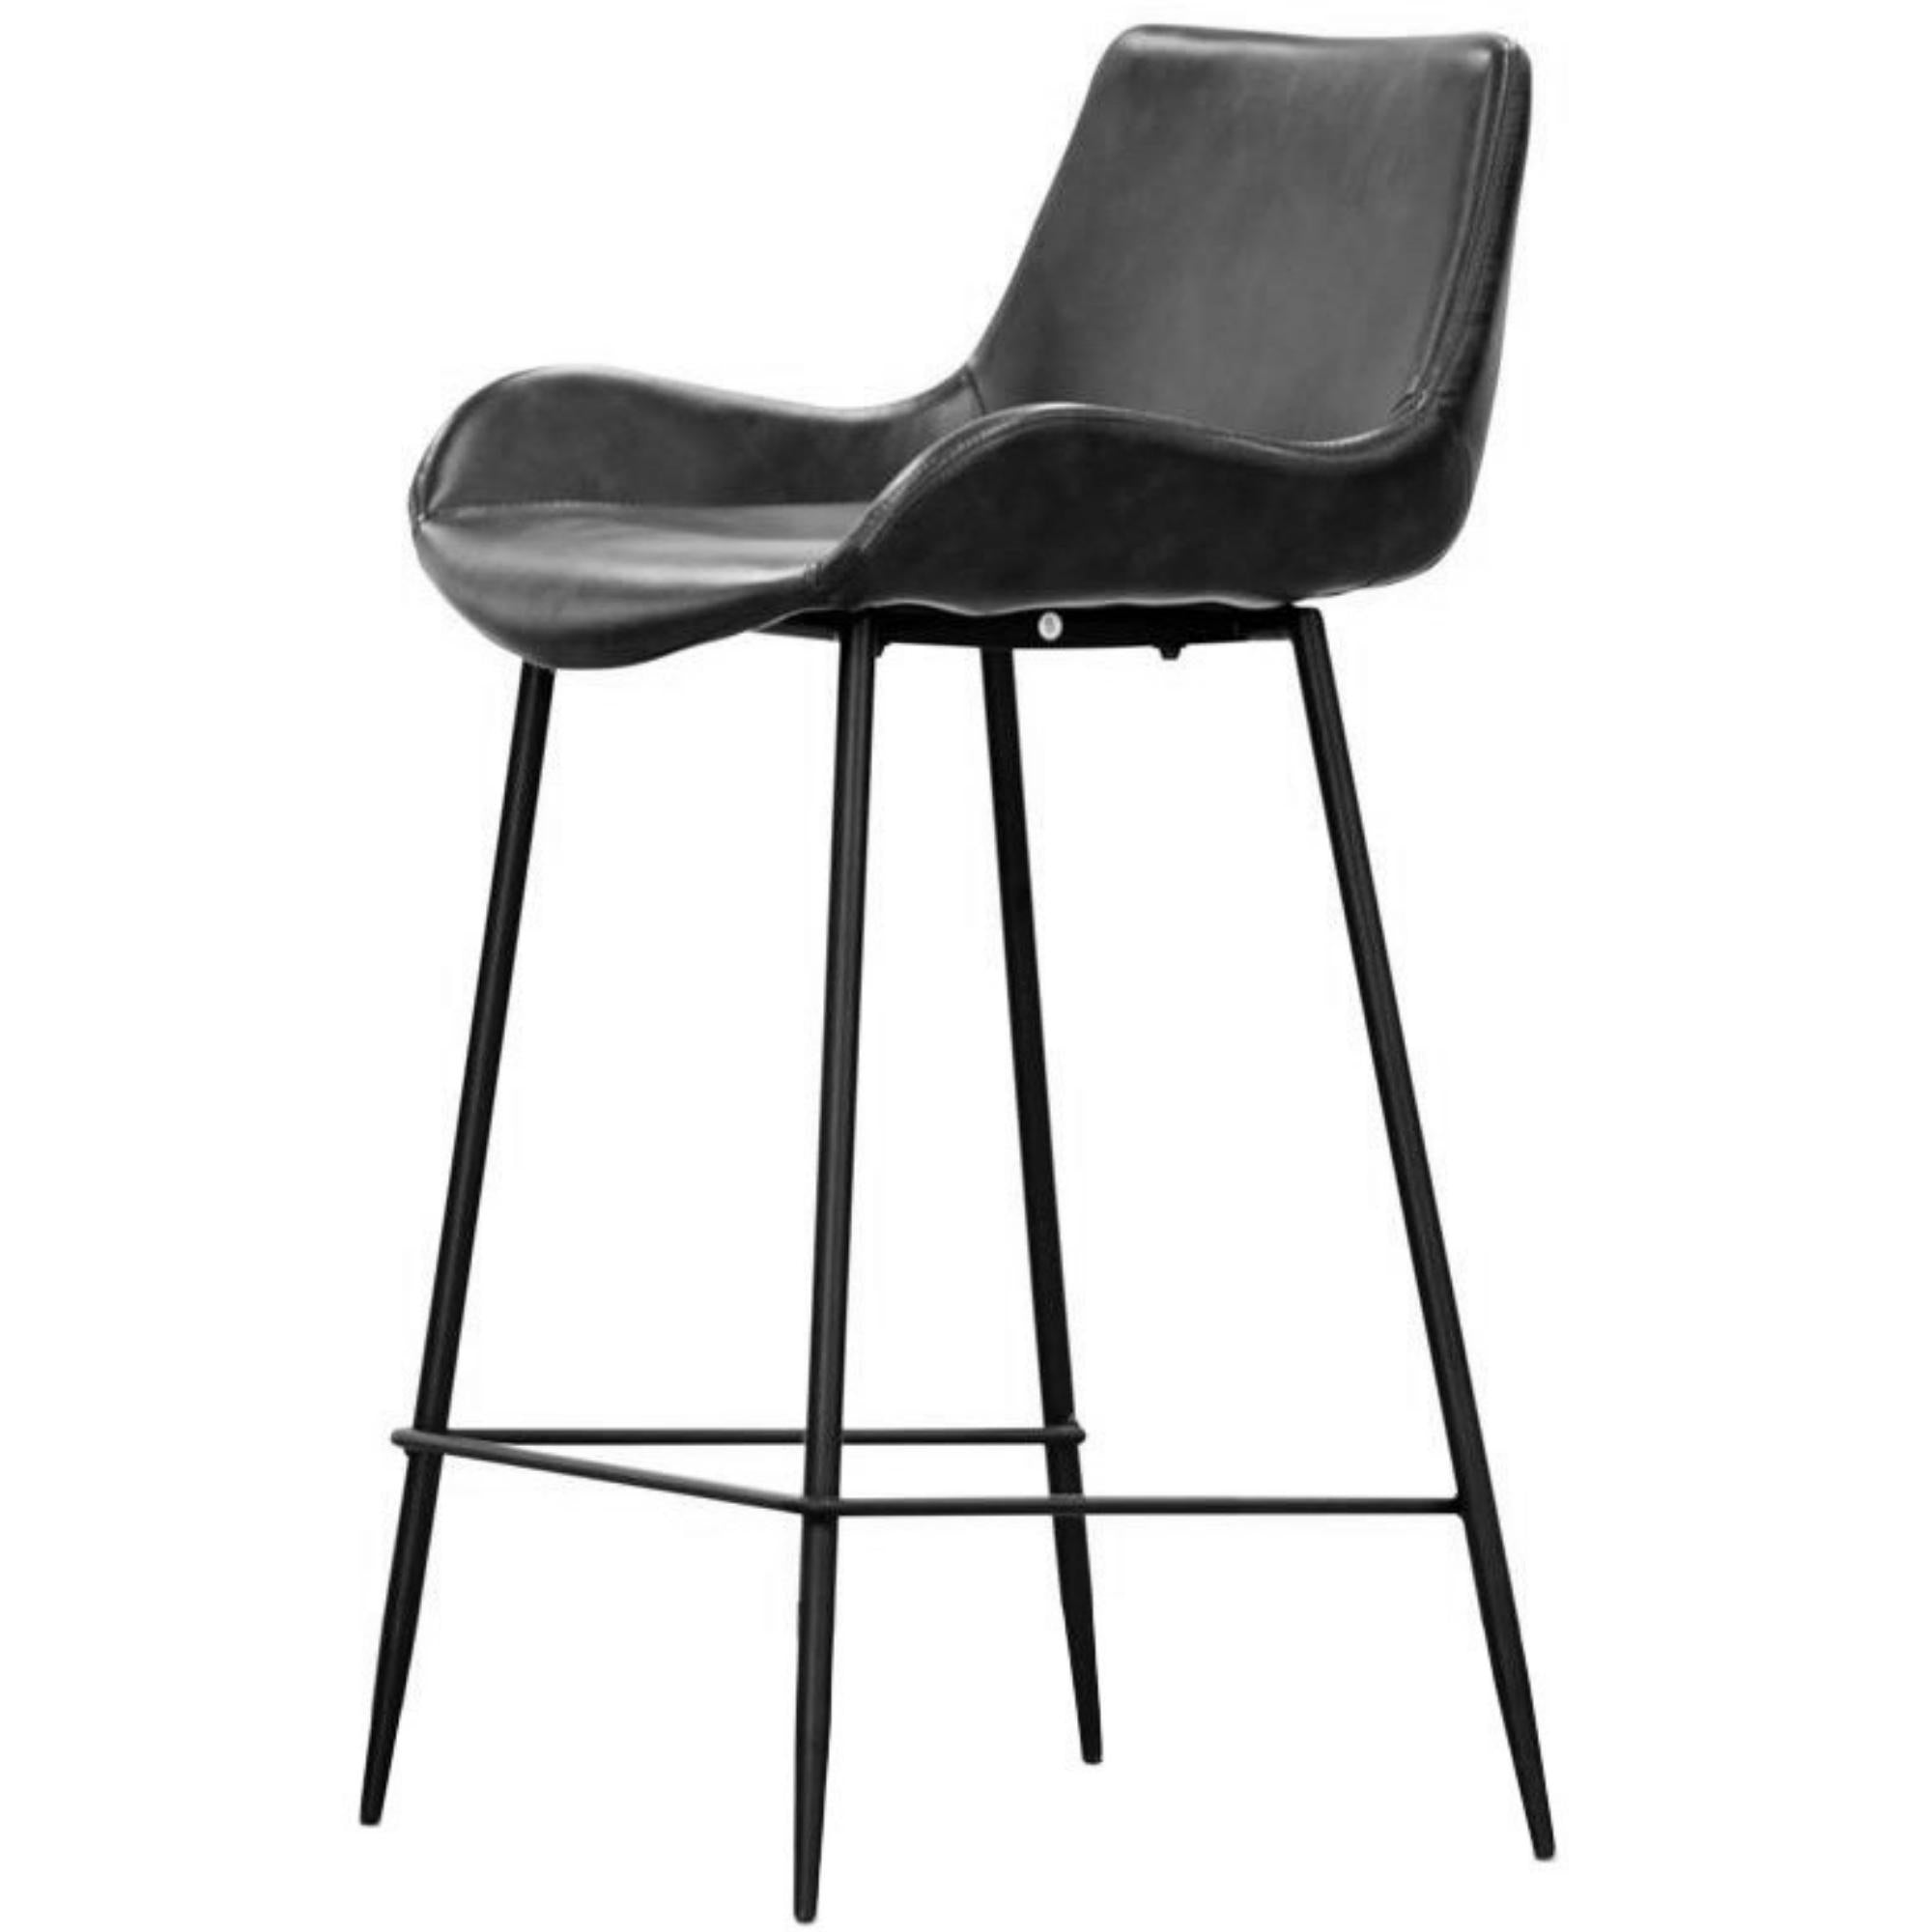 Set of 2 PU Leather Upholstered Bar Chair Metal Leg Stool Vintage Grey